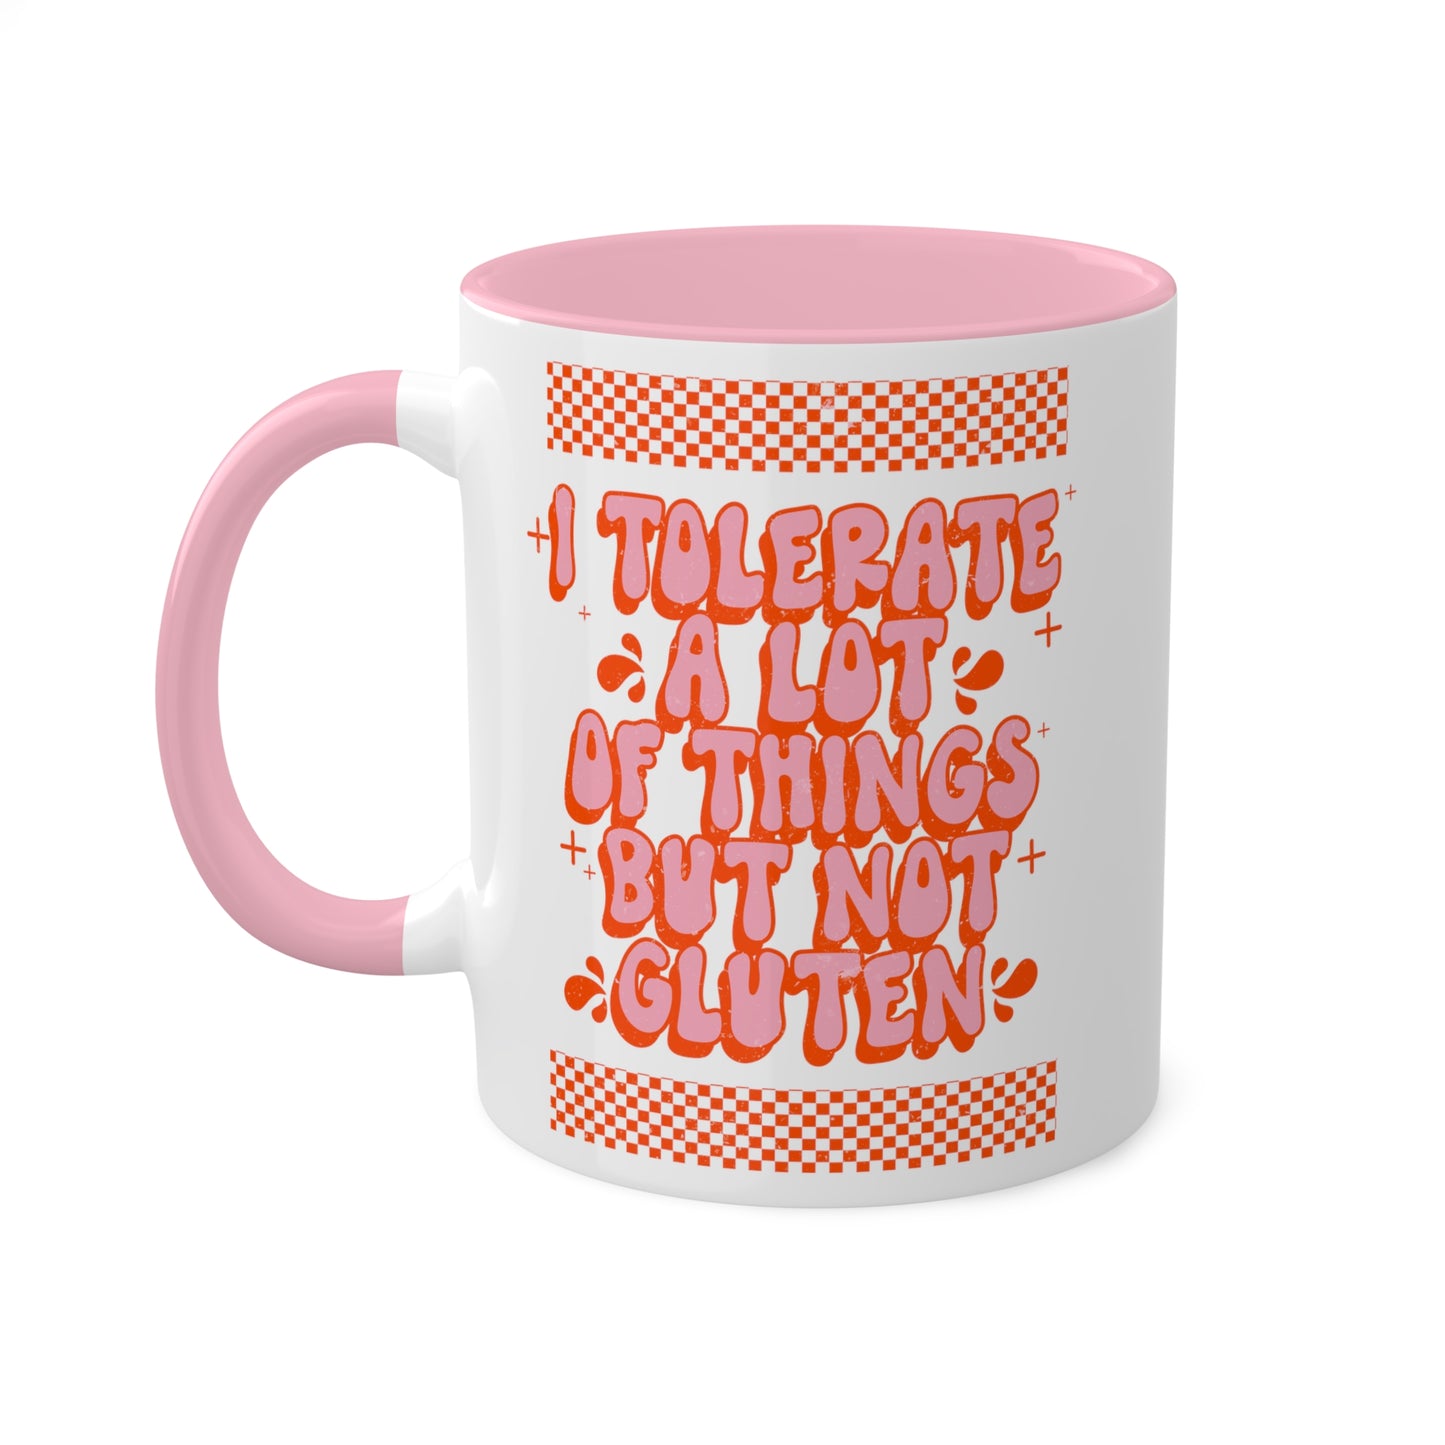 Gluten Intolerant Coffee Mug - Funny Gluten-Free Quote Cup, Humorous Foodie Gift, Celiac Awareness Mug, Novelty Ceramic Tea Mug